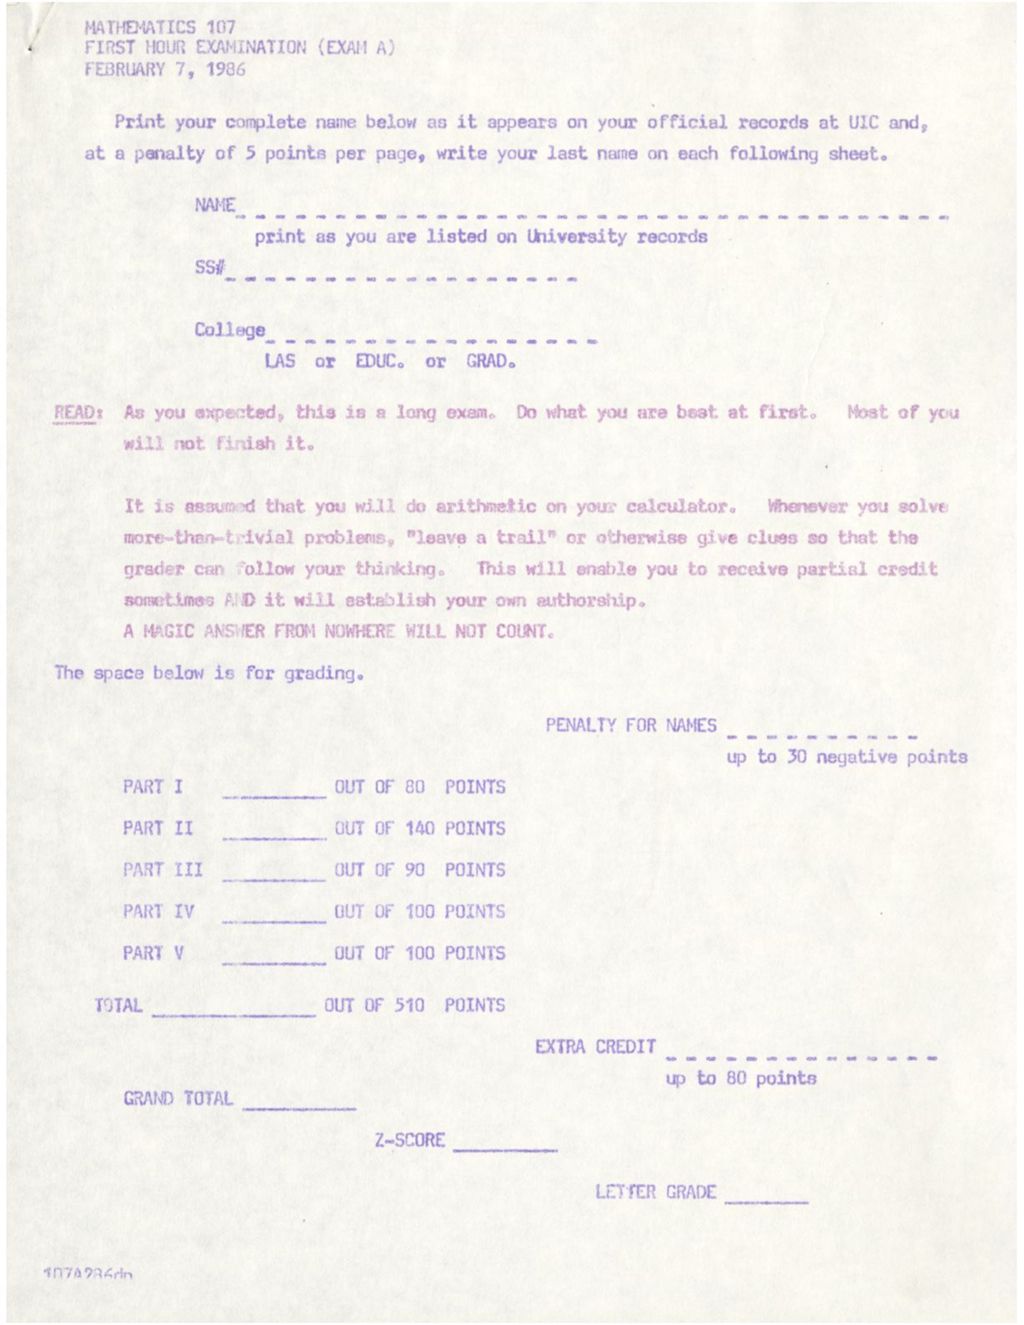 Miniature of Mathematics 107 First Hour Exam (1986)